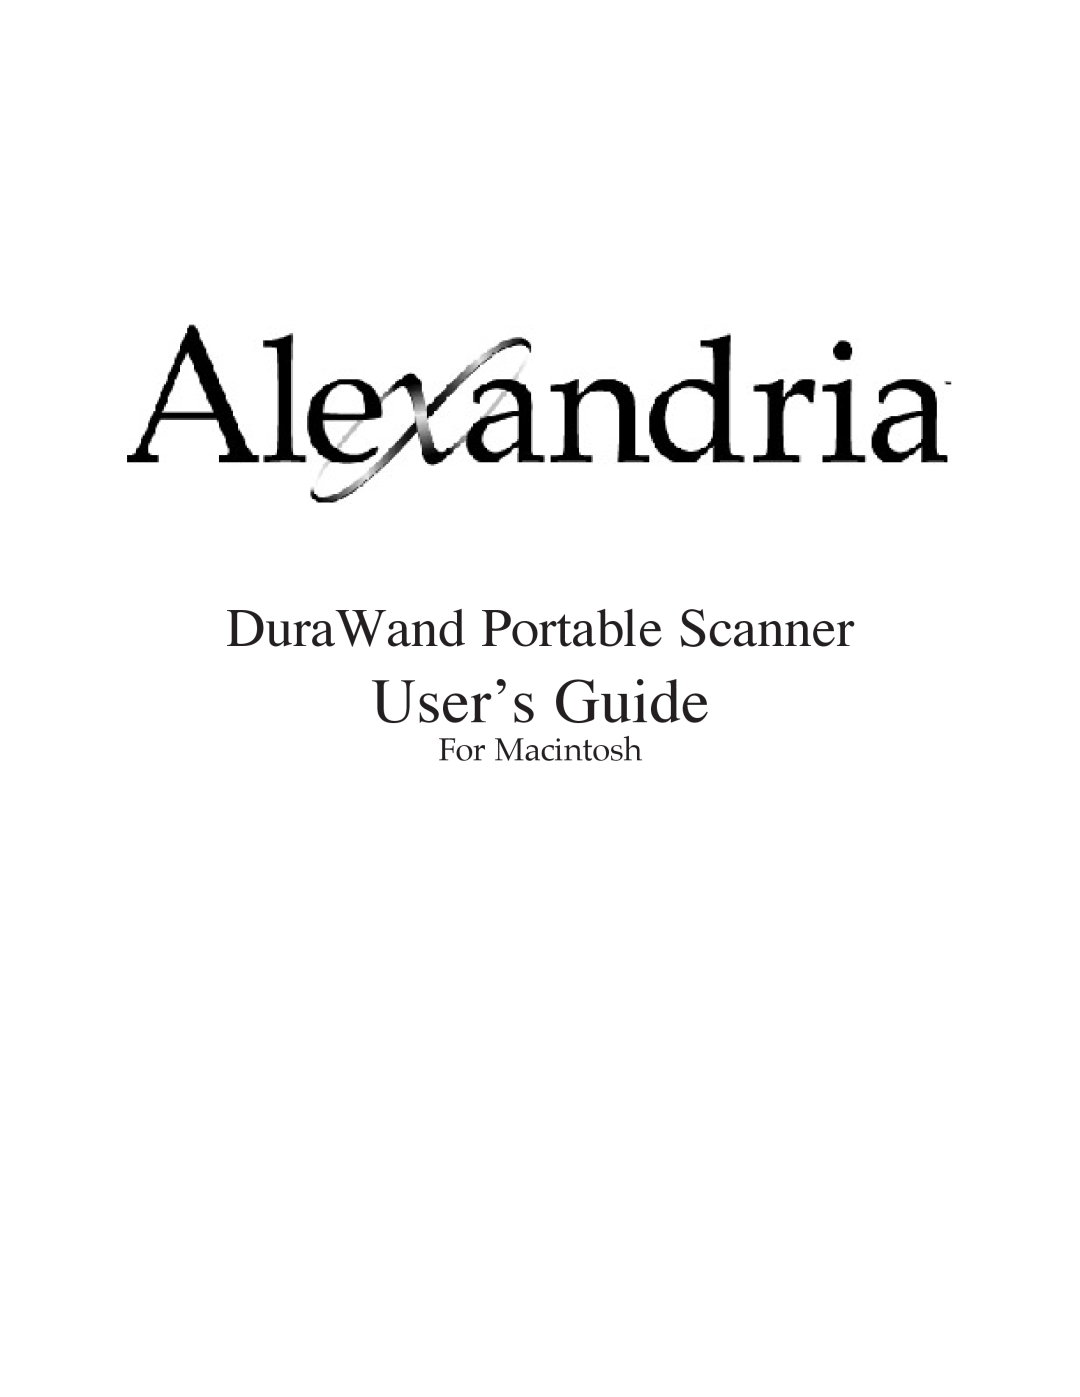 Keyspan DuraWand Portable Scanner manual For Macintosh, User’s Guide 